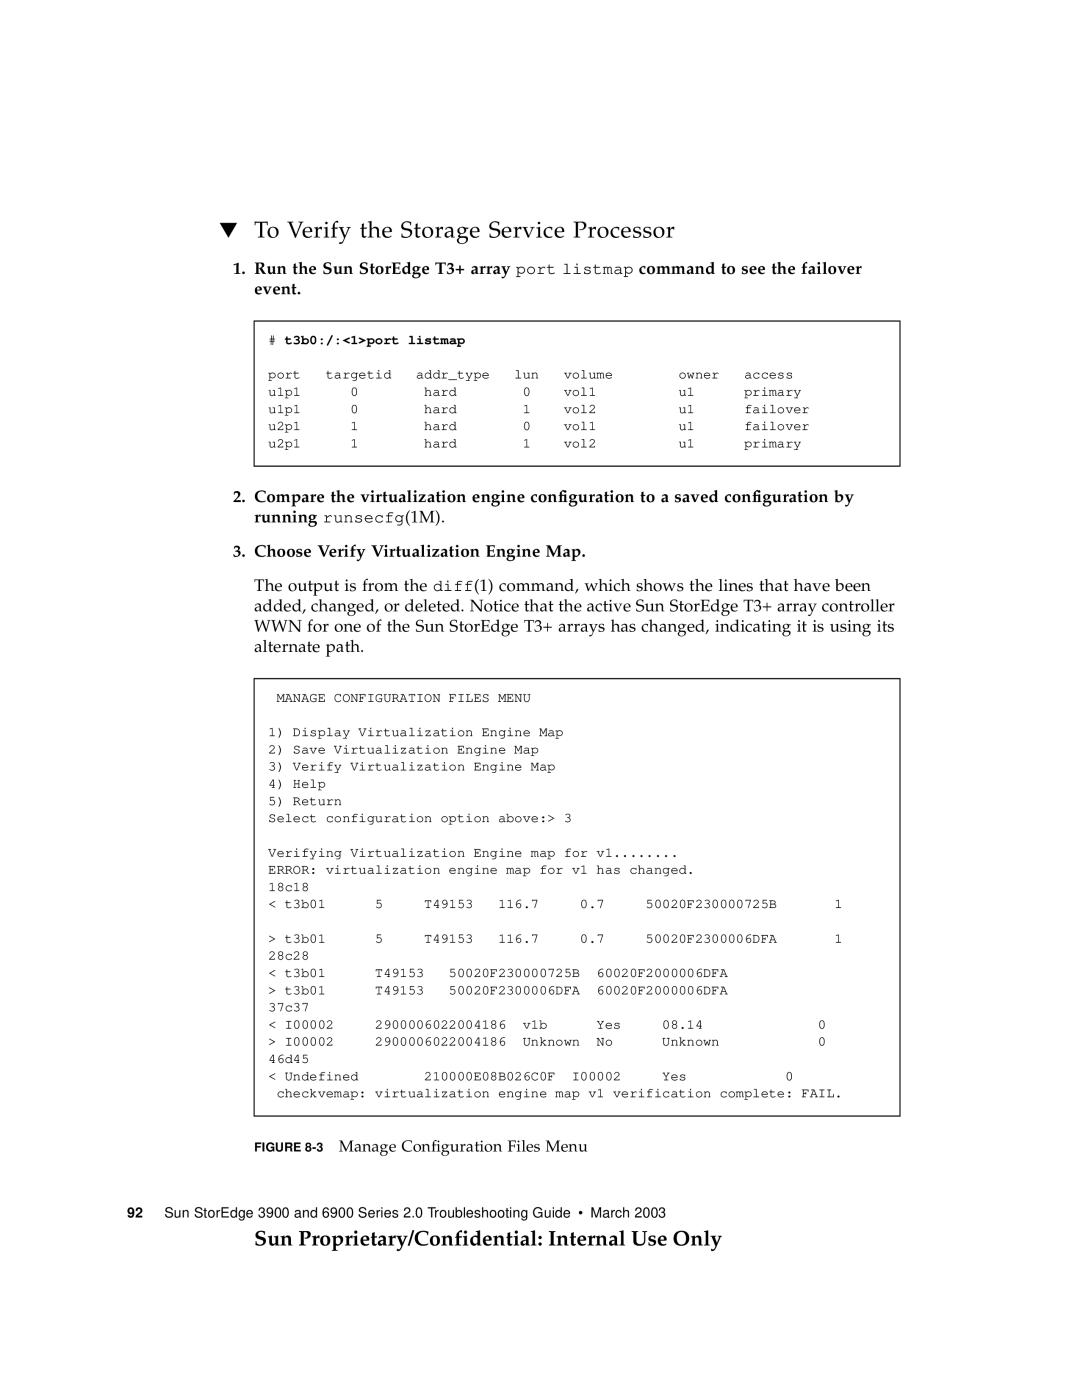 Sun Microsystems 3900, 6900 manual To Verify the Storage Service Processor, Sun Proprietary/Confidential Internal Use Only 